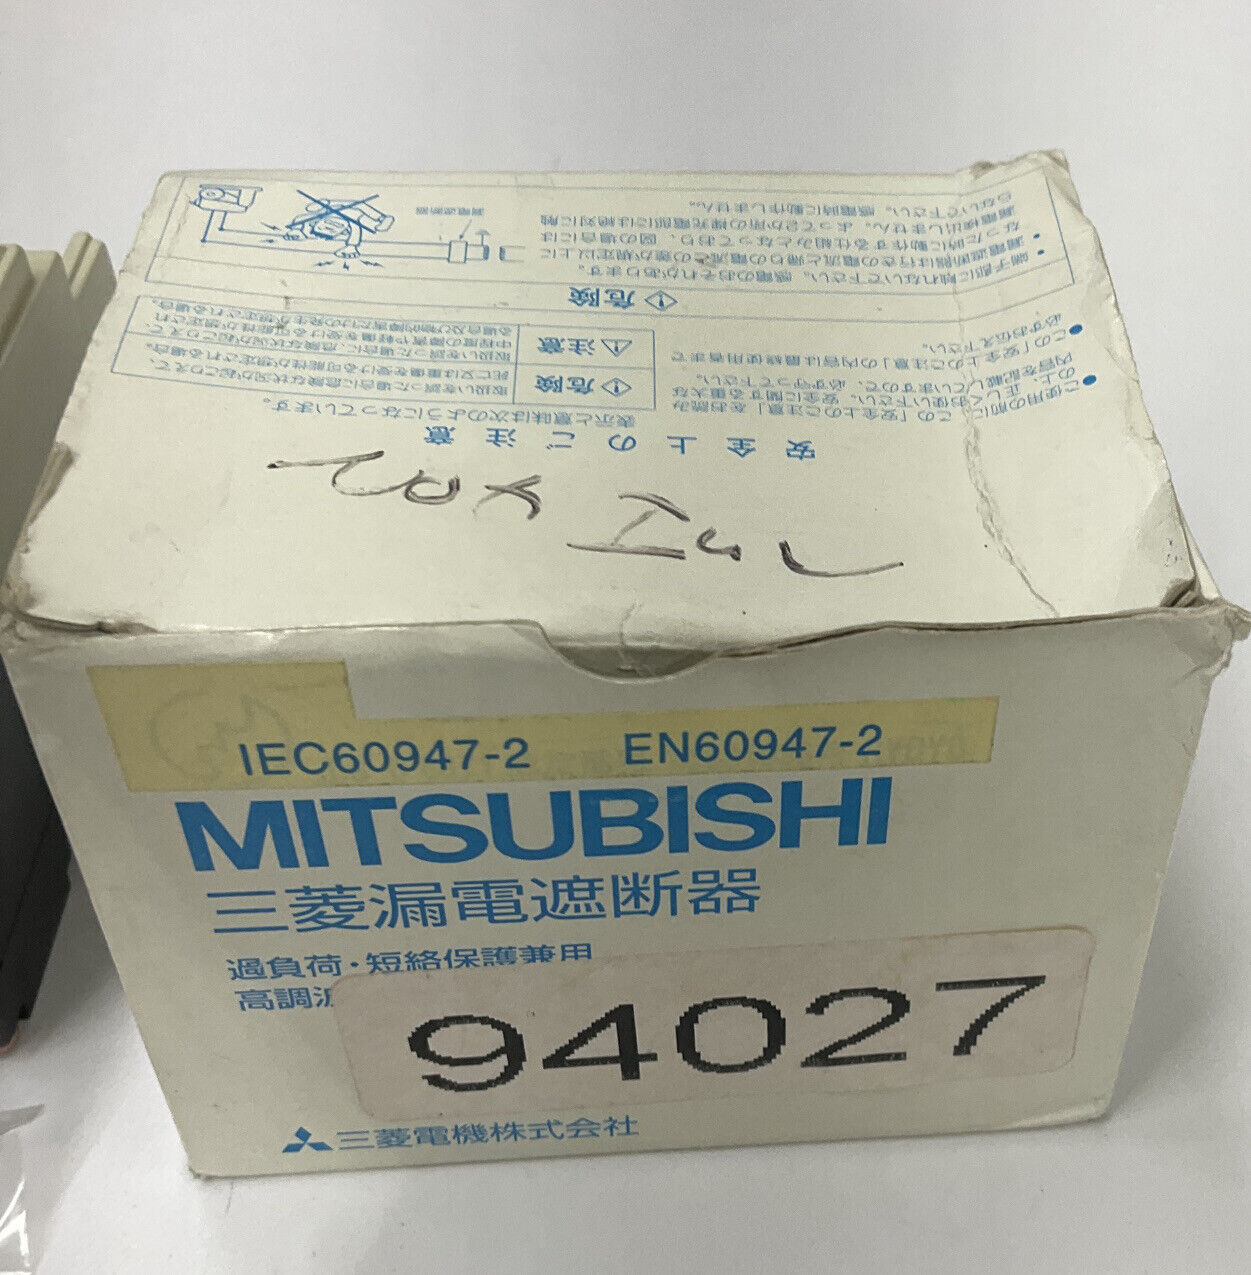 Mitsubishi NV100-FHU 3-Pole 230-240VAC Circuit Breaker 75 AMP (YE232)